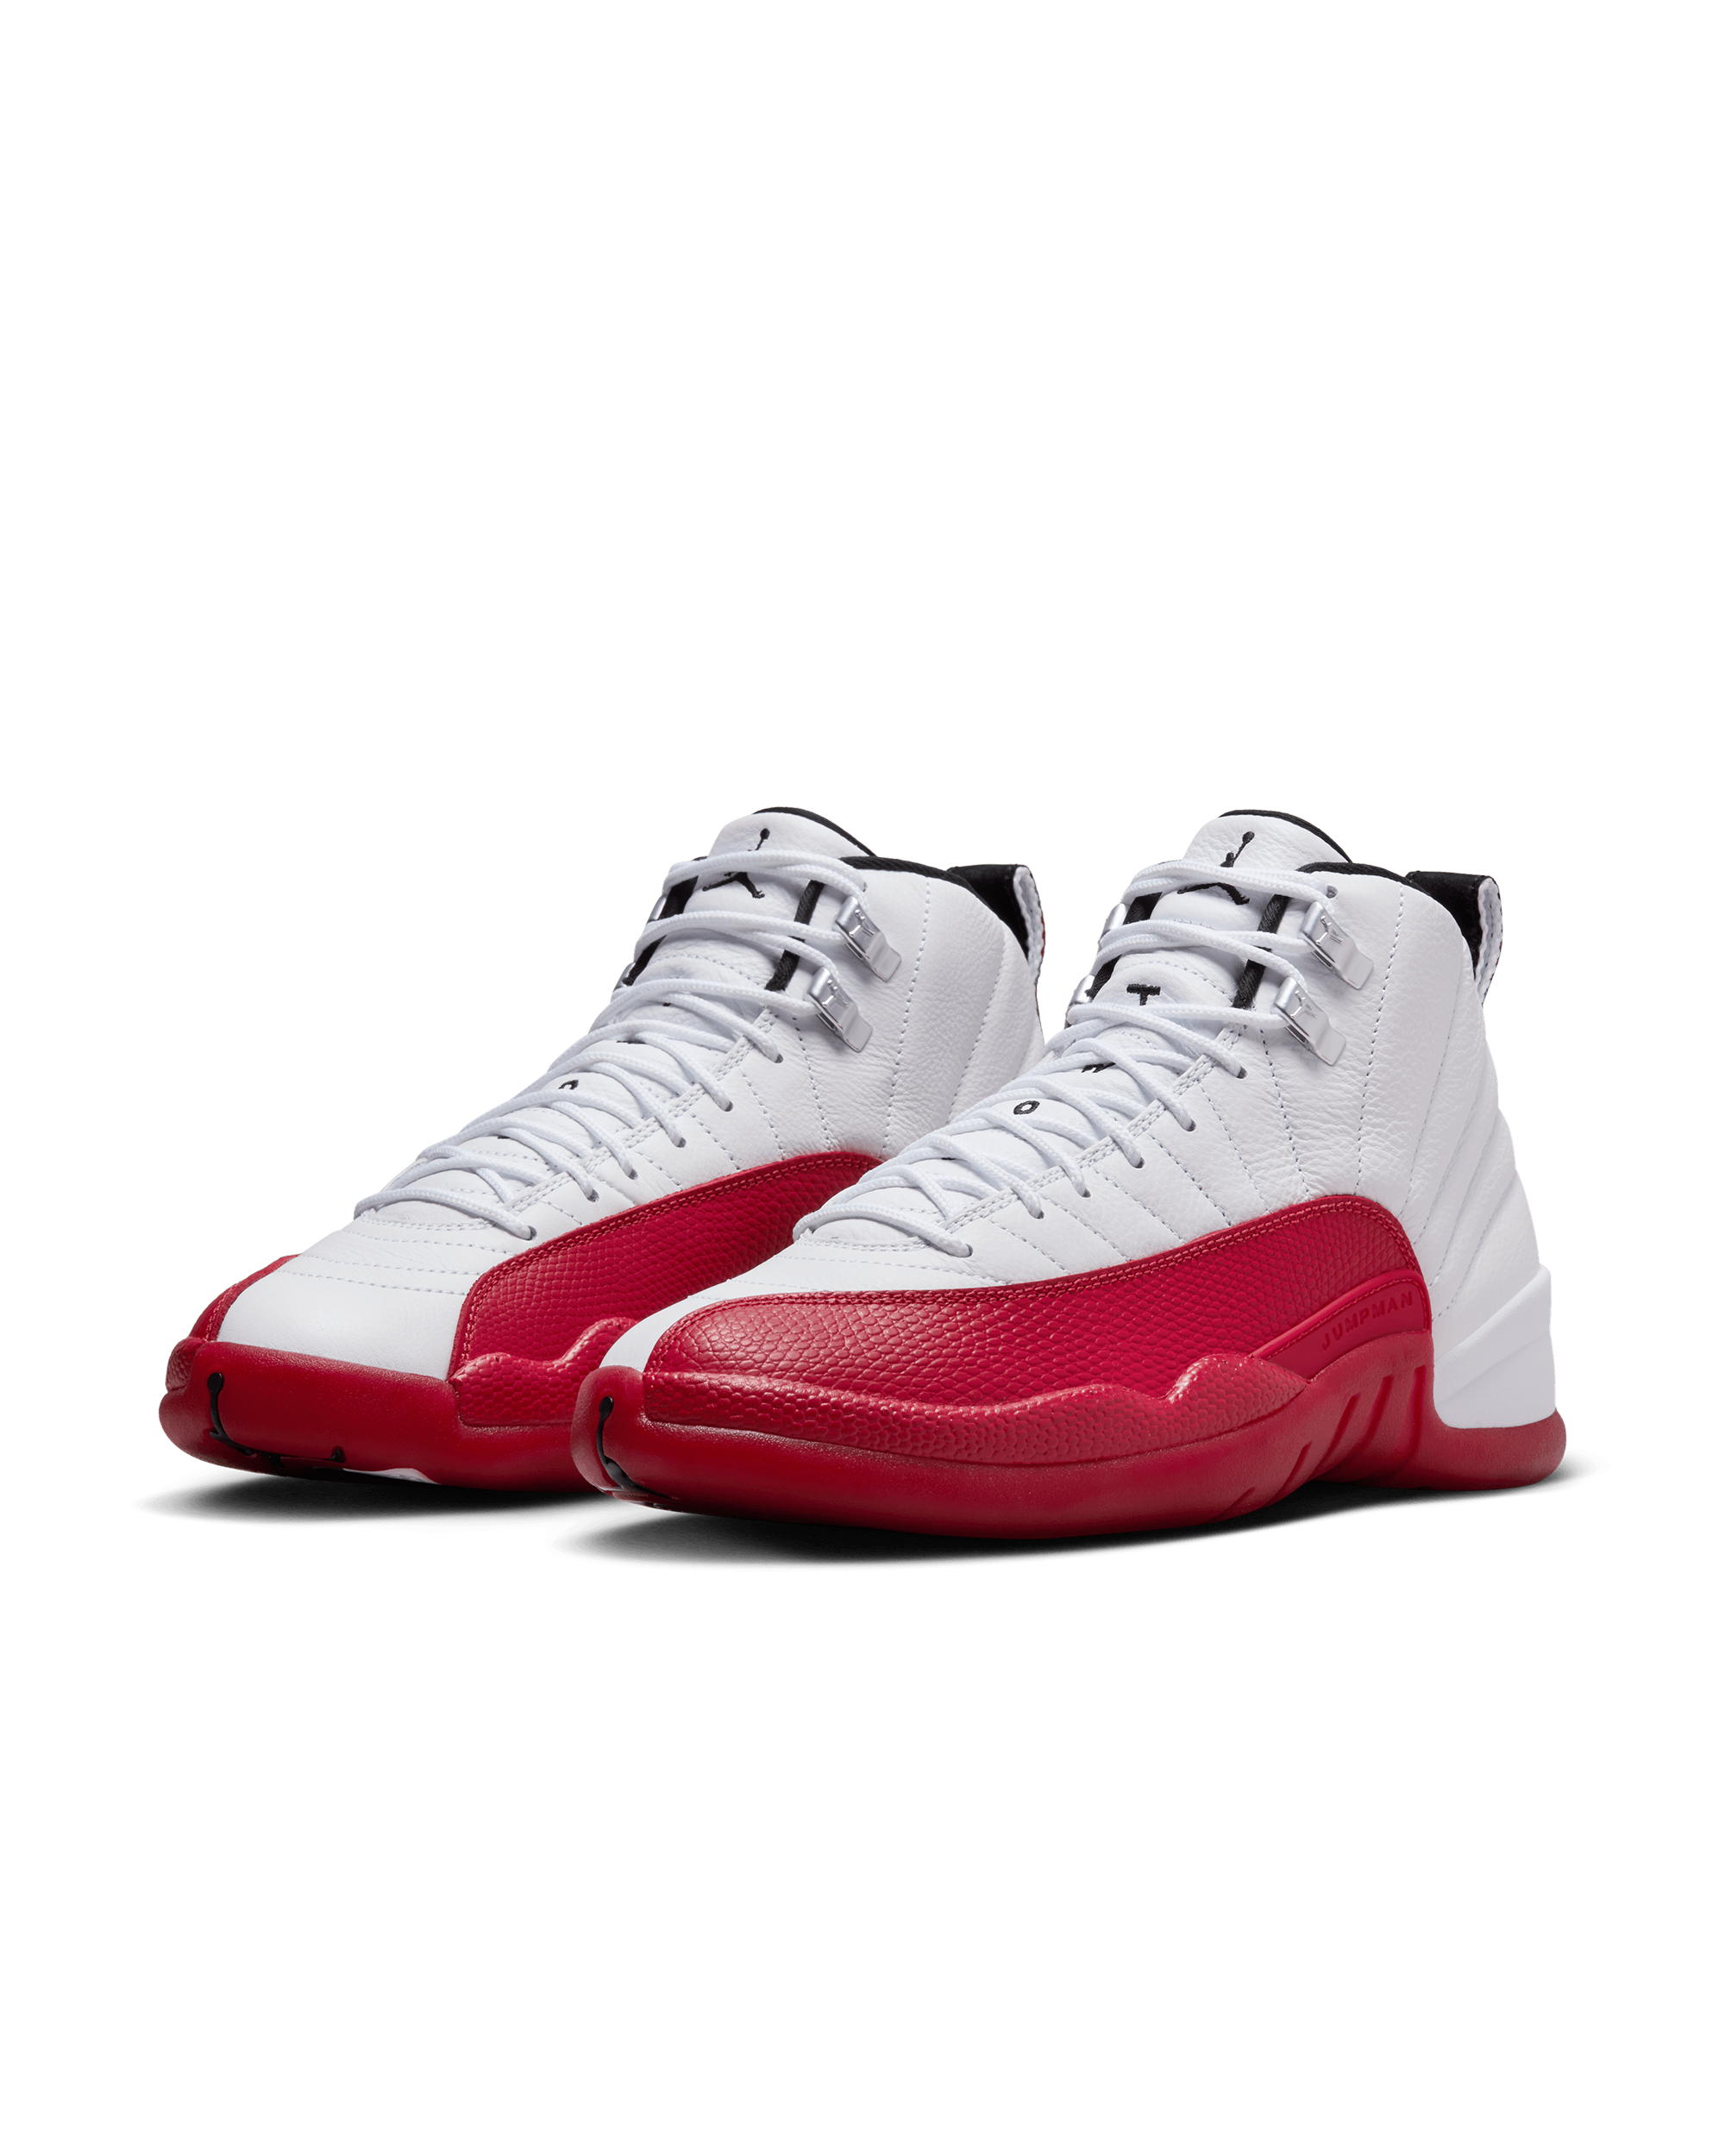 Air Jordan 12 Retro "Cherry" - White / Black / Varsity Red